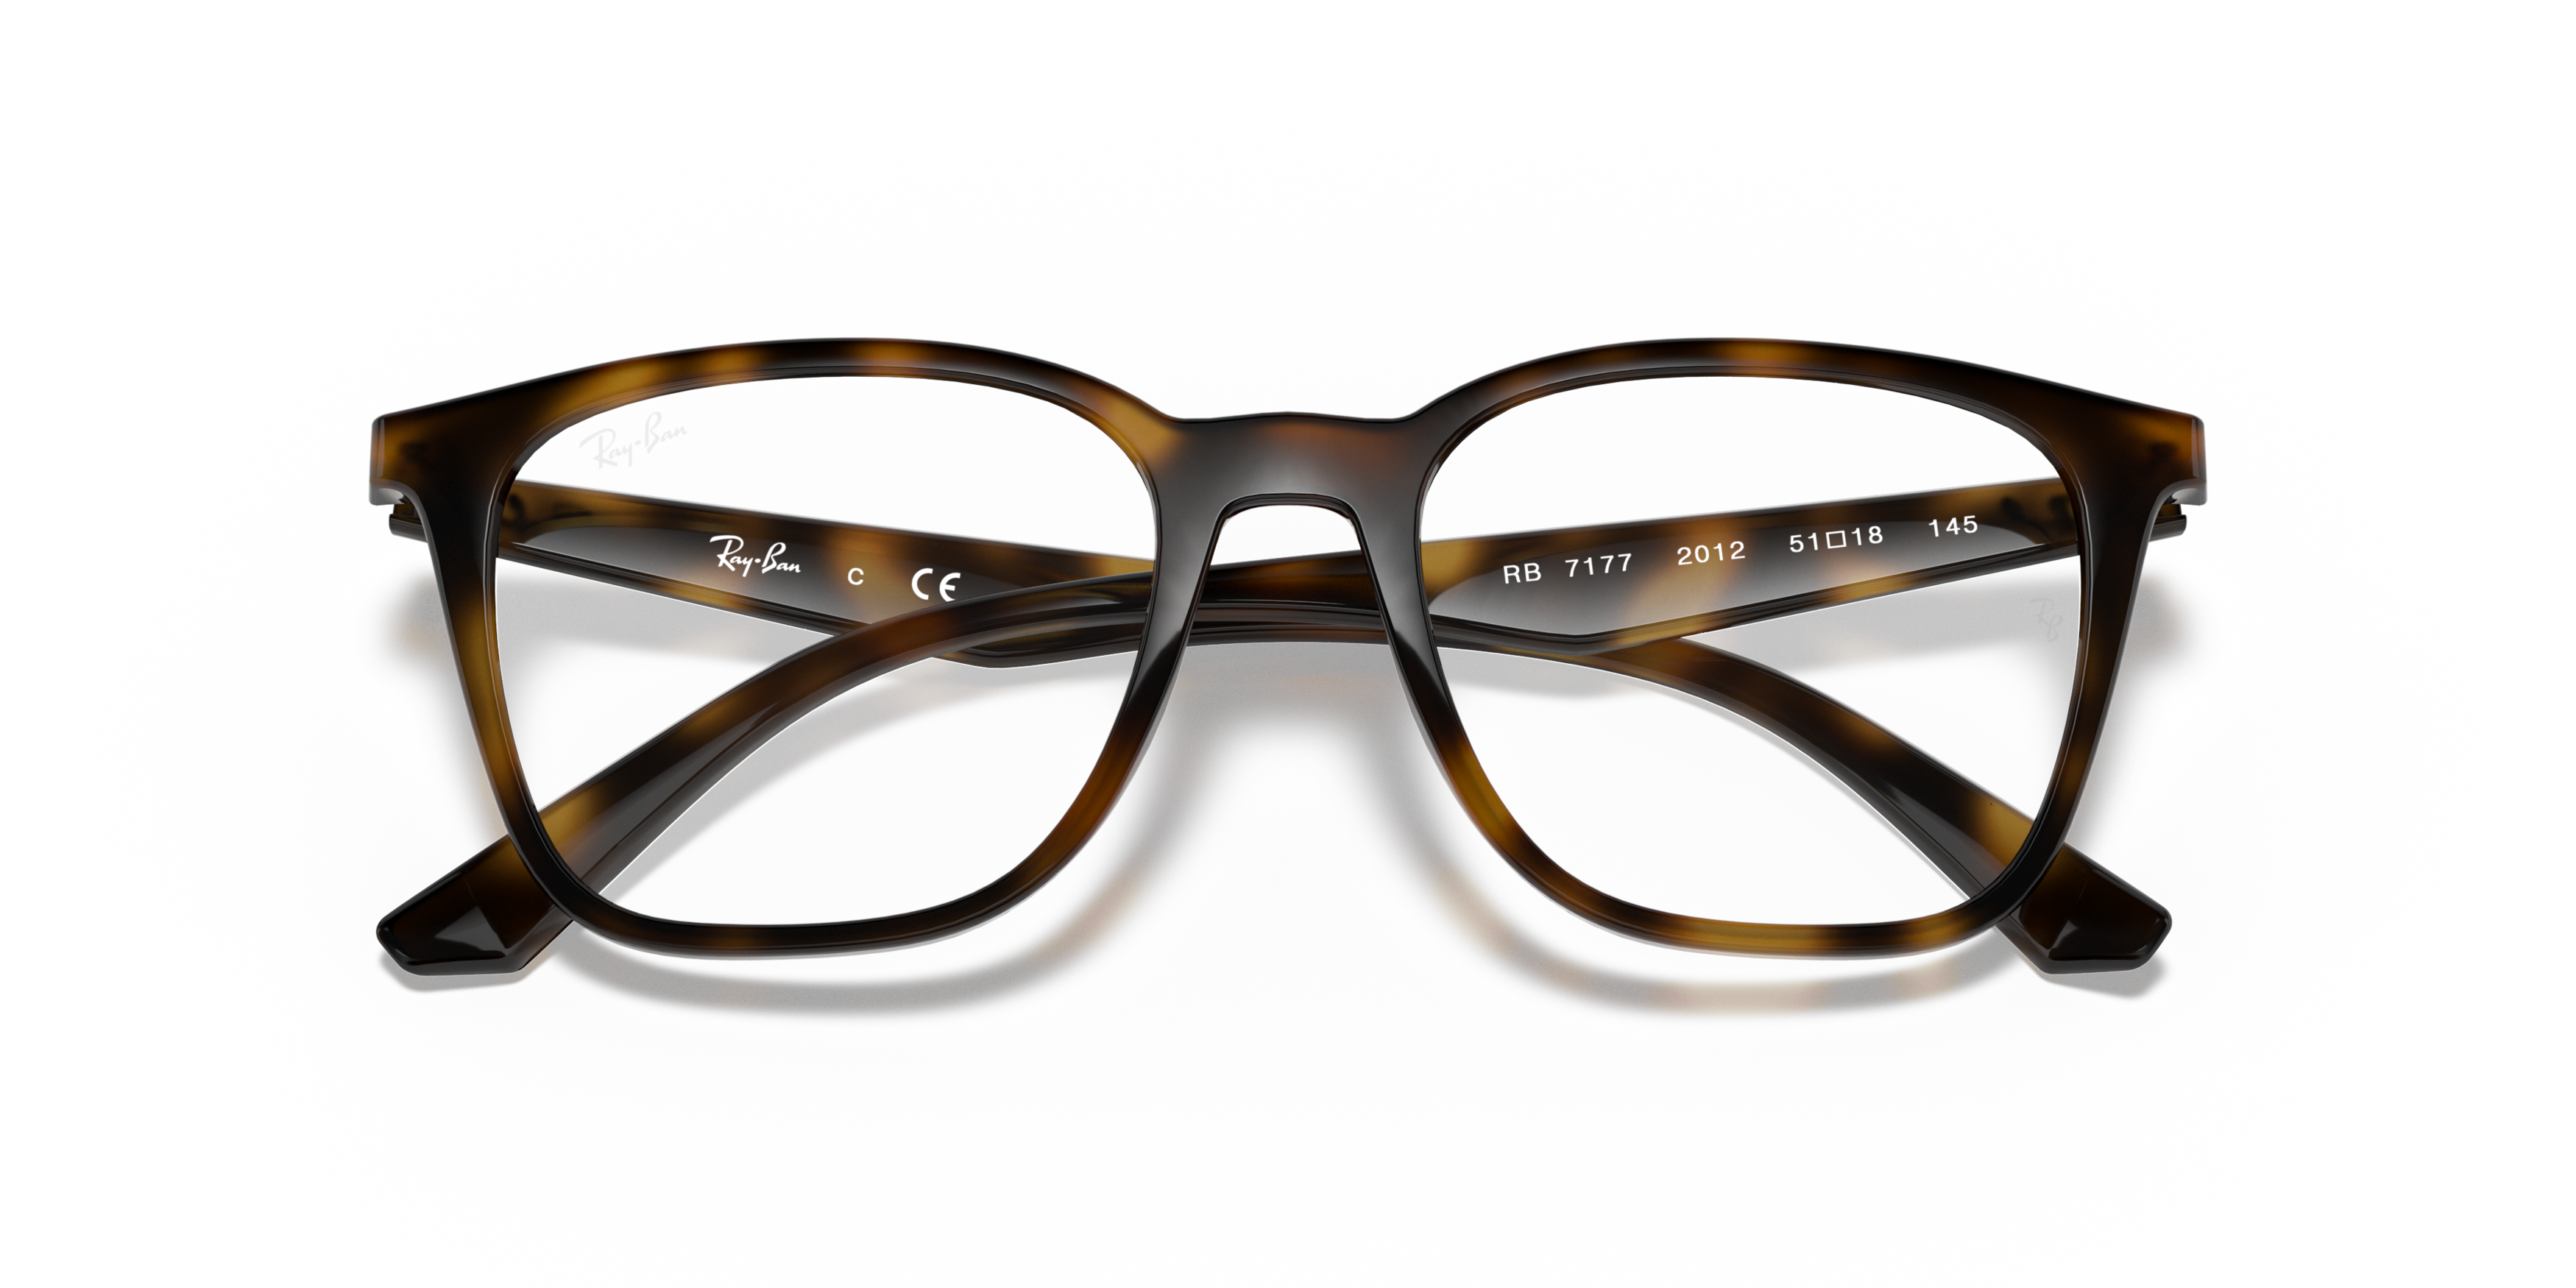 Folded Ray-Ban RX 7177 (2012) Glasses Transparent / Tortoise Shell